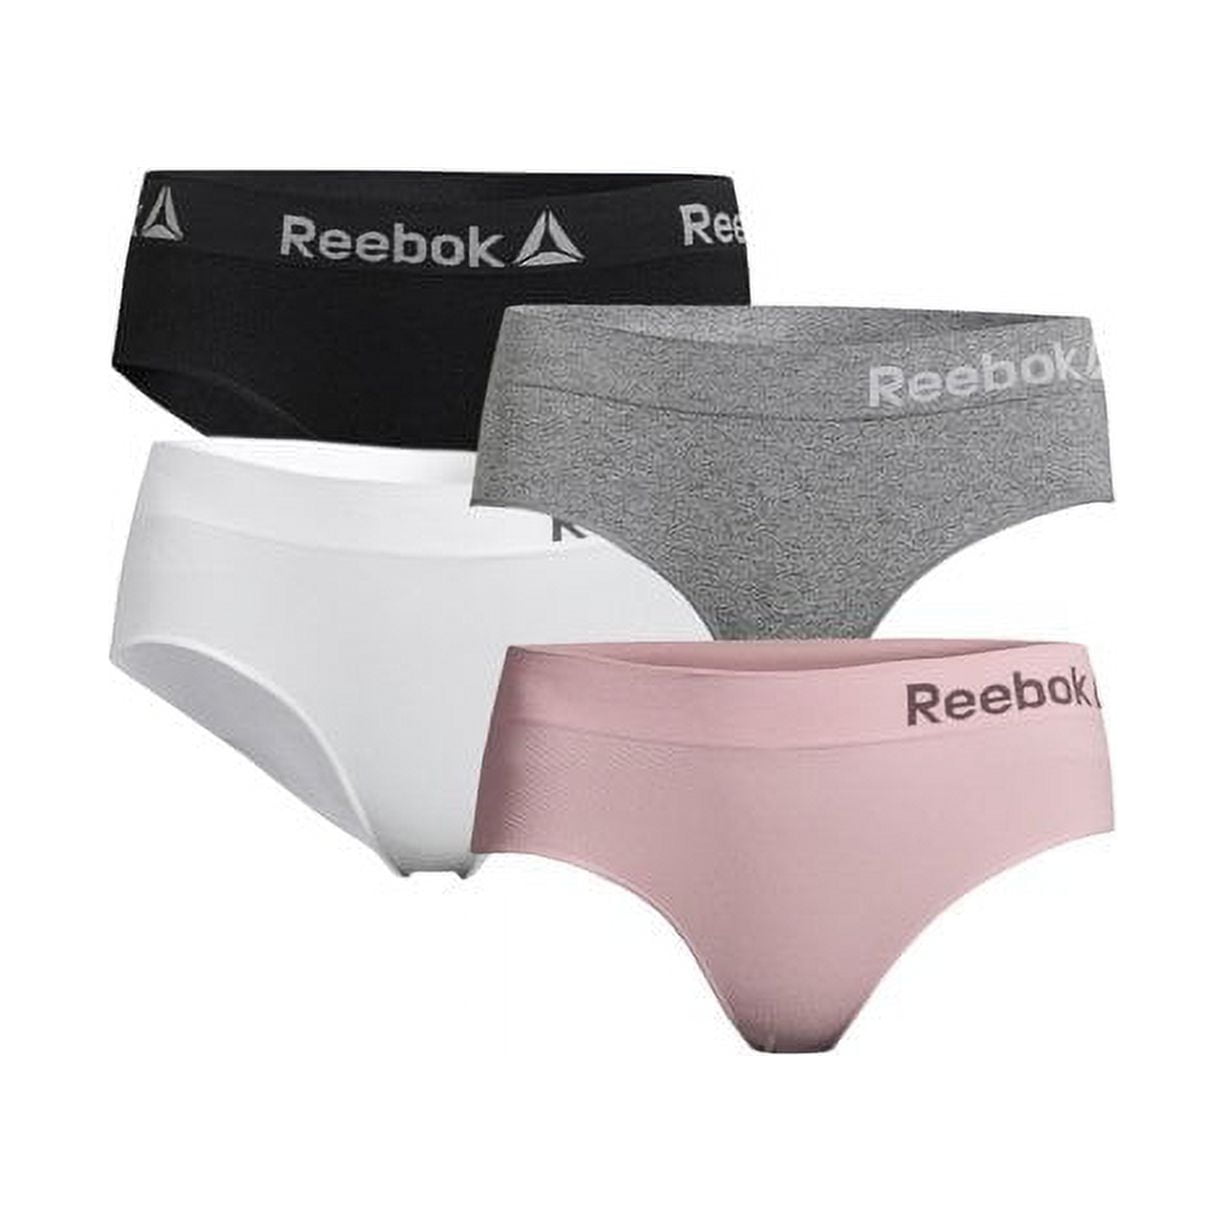 Set of 4 delmas panties woman Reebok - Women's underwear - Underwear -  Accessories